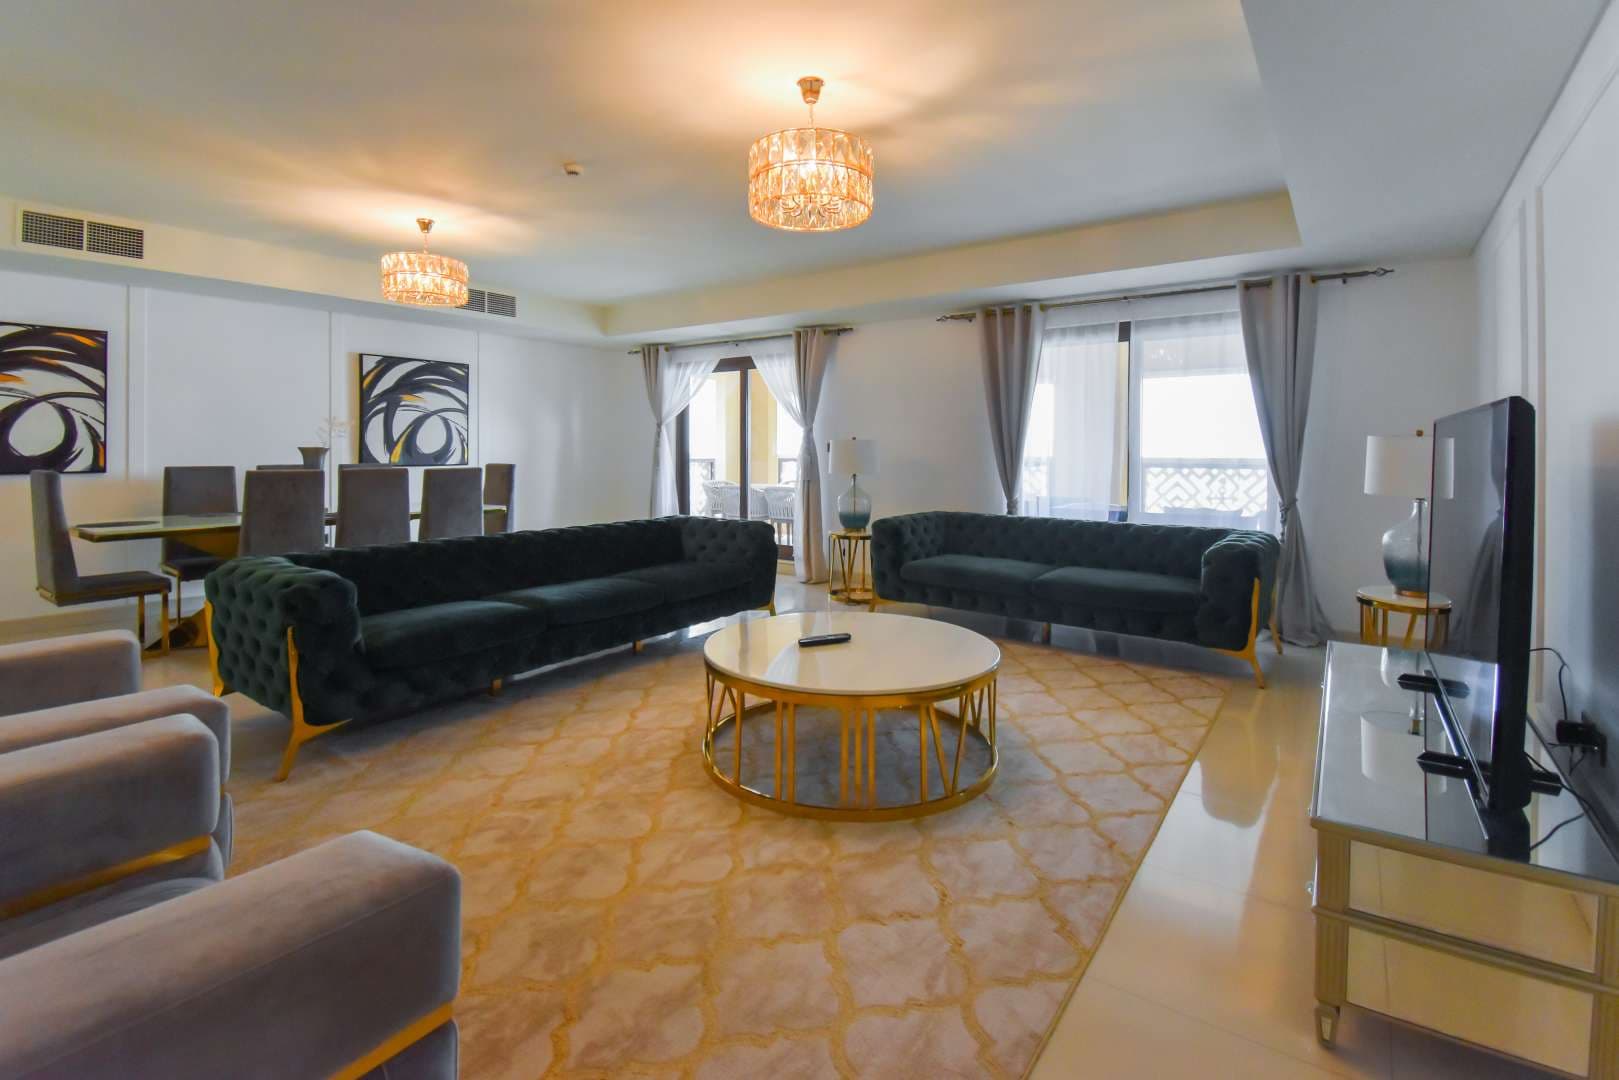 4 Bedroom Apartment For Sale Kingdom Of Sheba Lp10846 30f82e2c50dc0c00.jpg